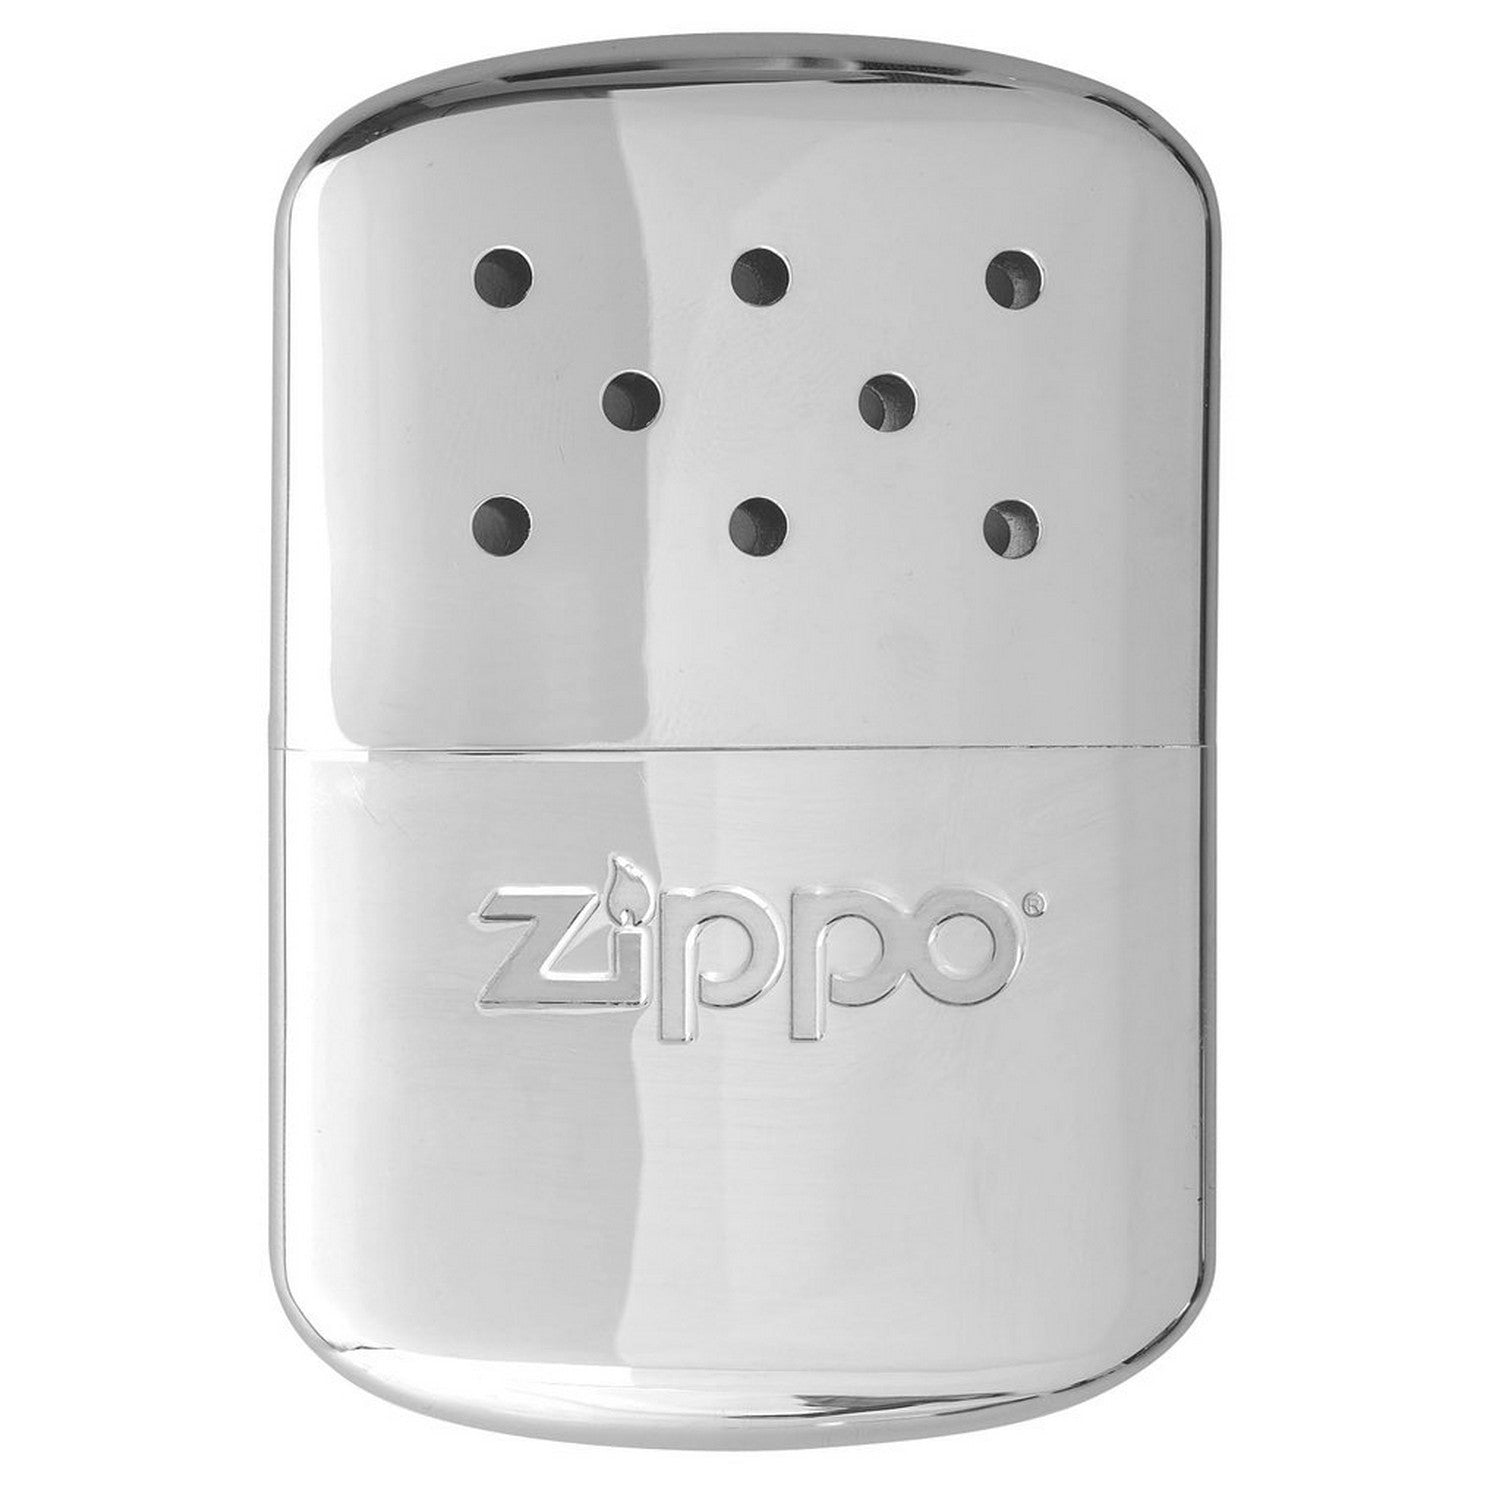 Zippo 12 Hour Refillable Metal High Polished Chrome Hand Warmer